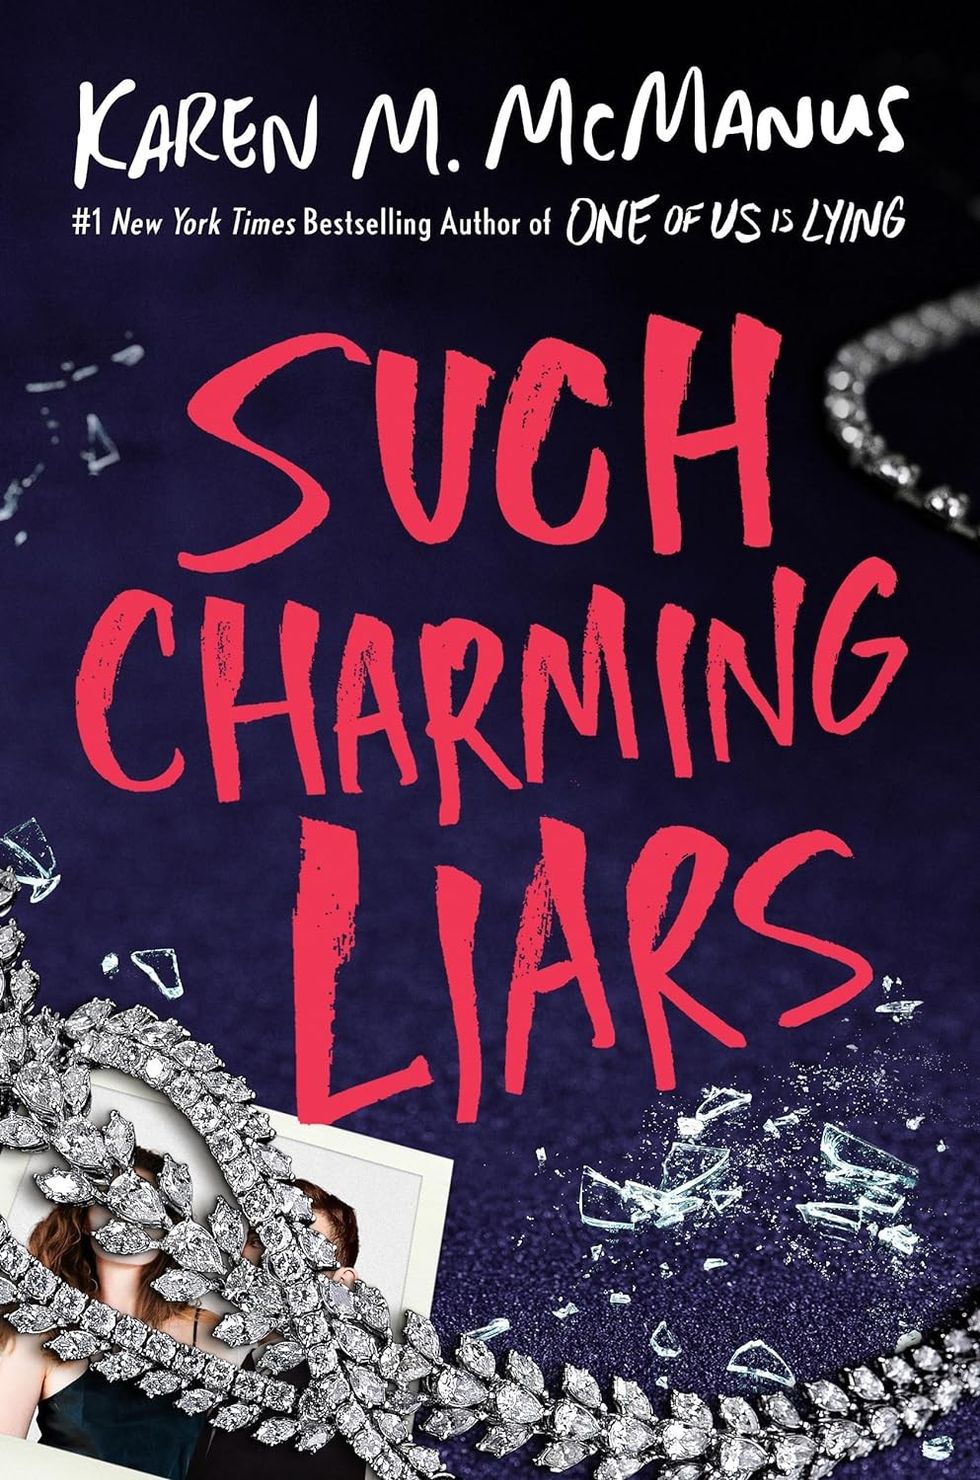 Such Charming Liars by Karen M. McManus